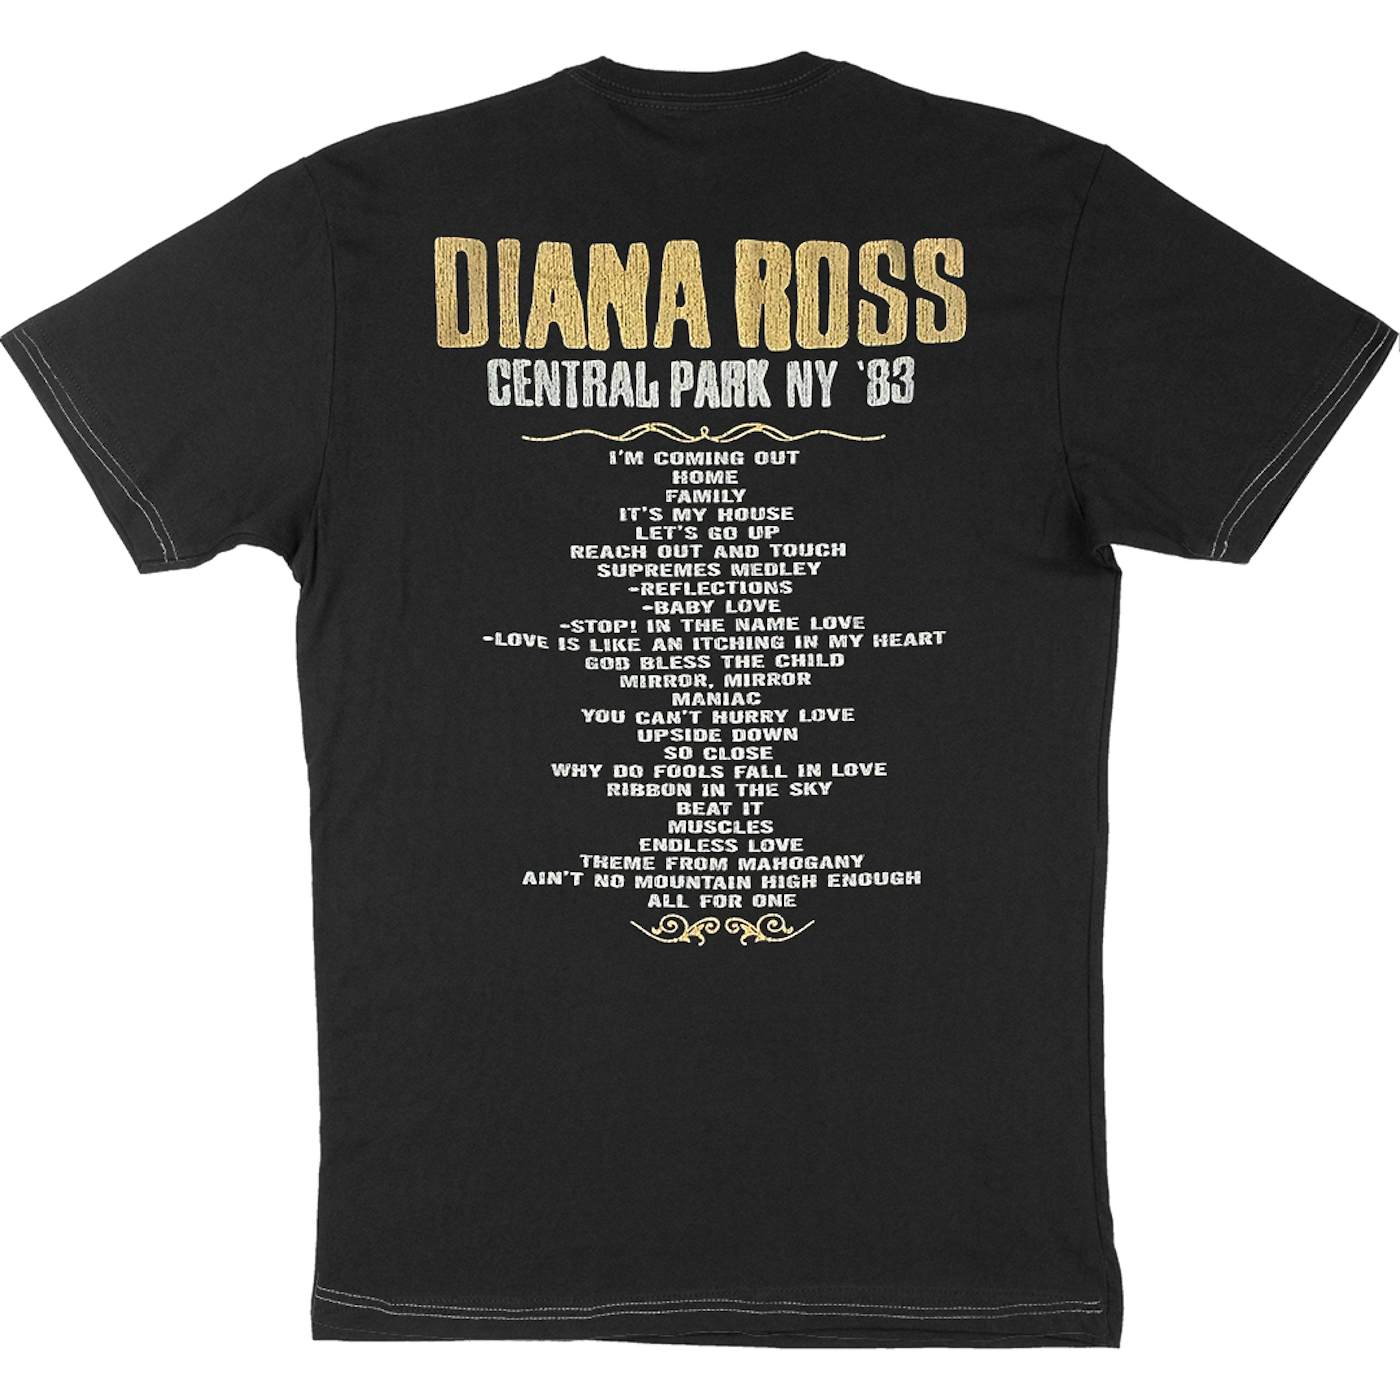 Diana Ross "Central Park 83" T-Shirt